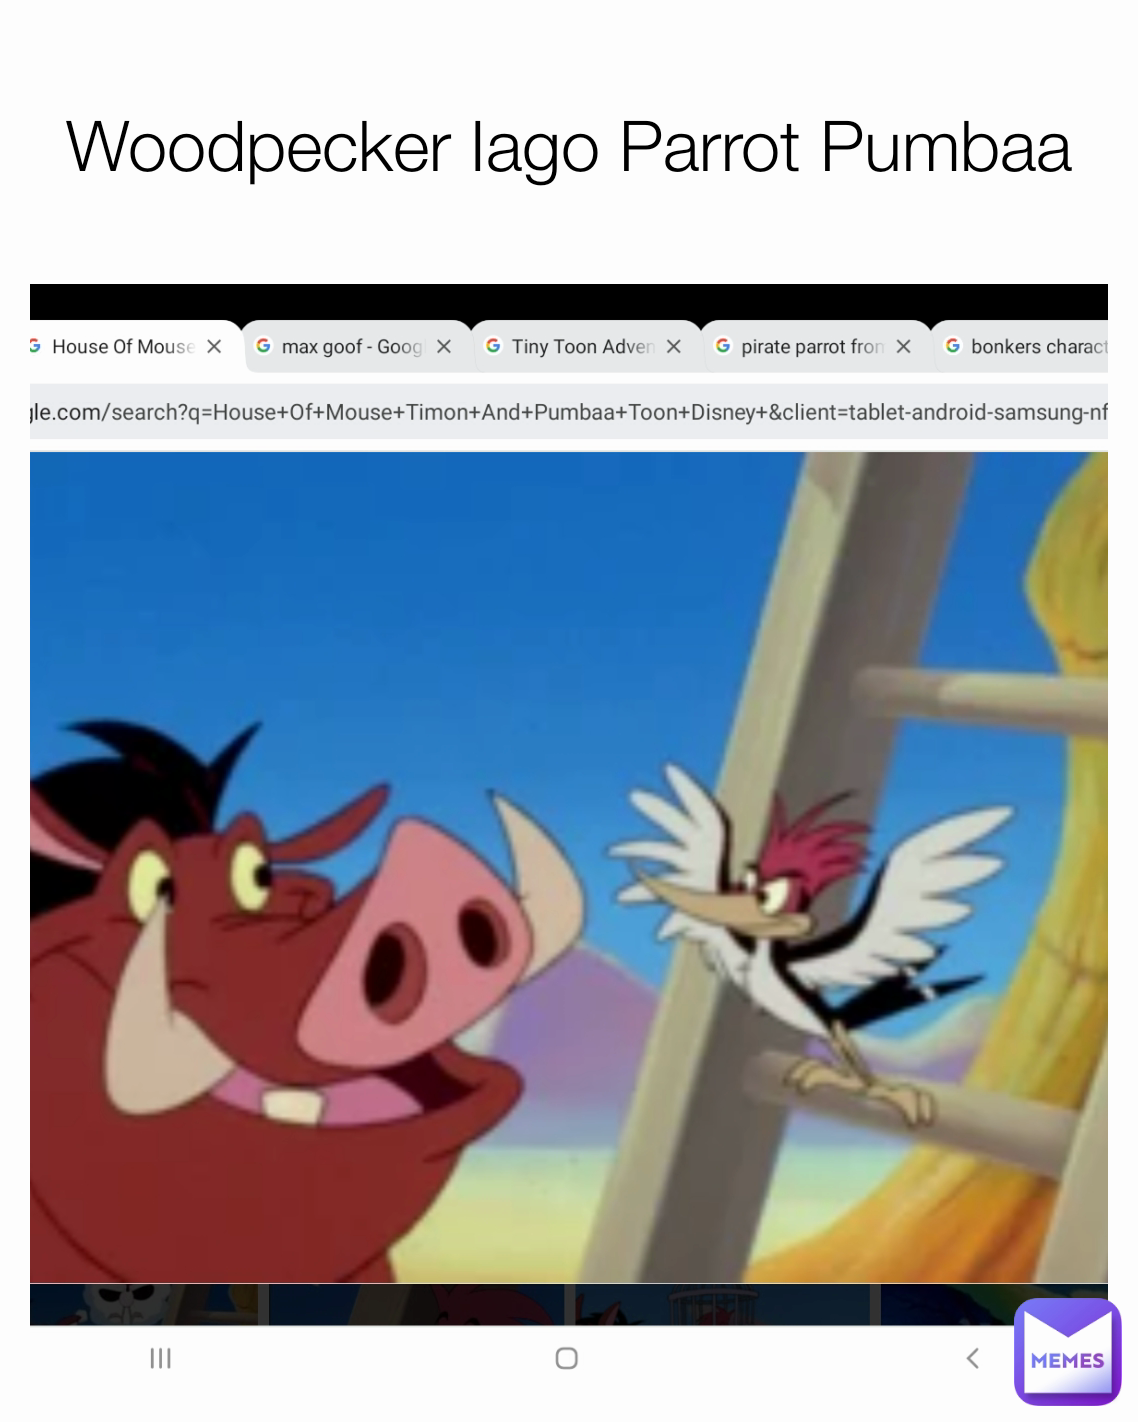 Woodpecker Iago Parrot Pumbaa